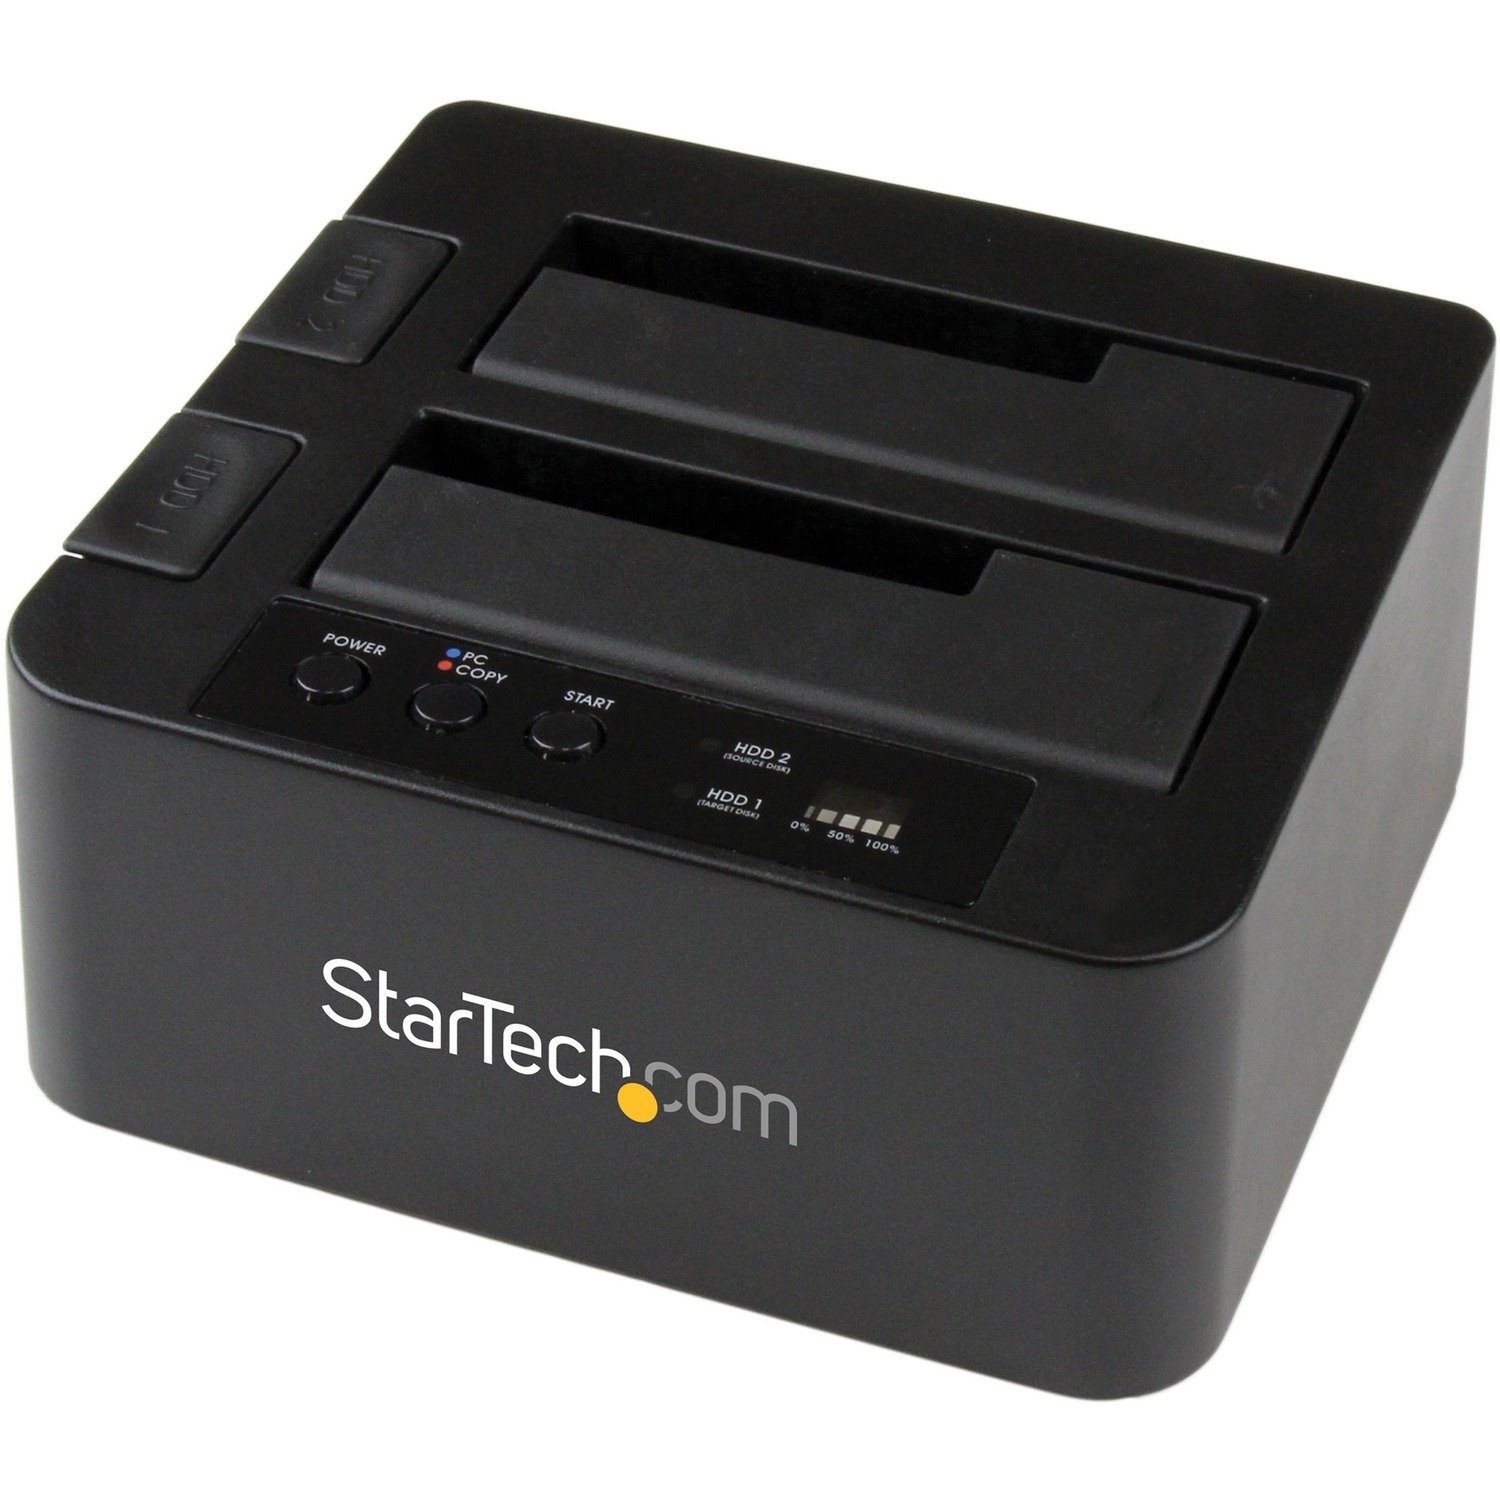 StarTech.com Hard Drive/Solid State Drive Duplicator - Standalone